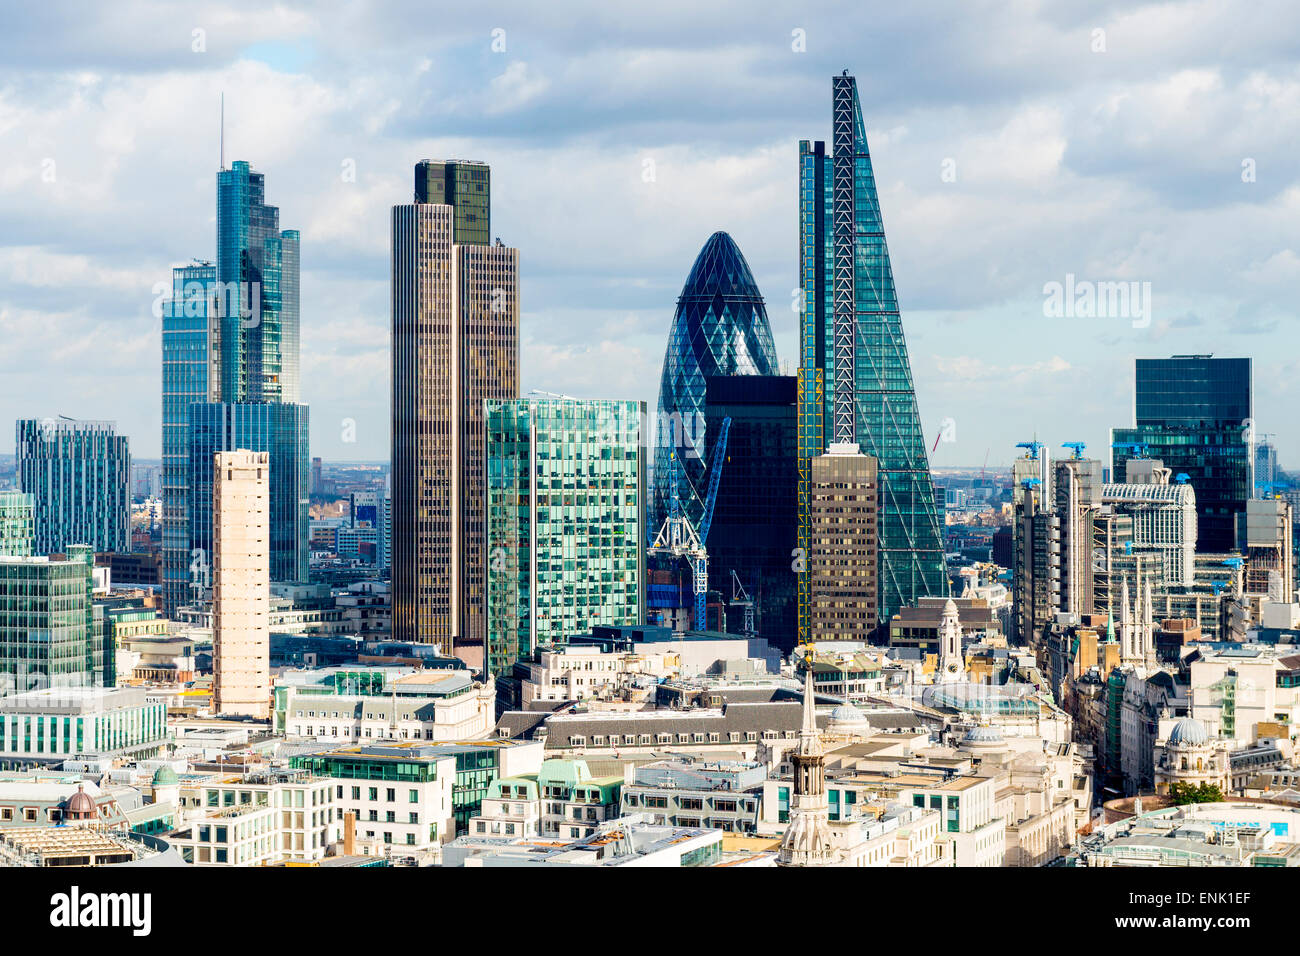 City Of London Skyline London England United Kingdom Europe Stock Photo Alamy